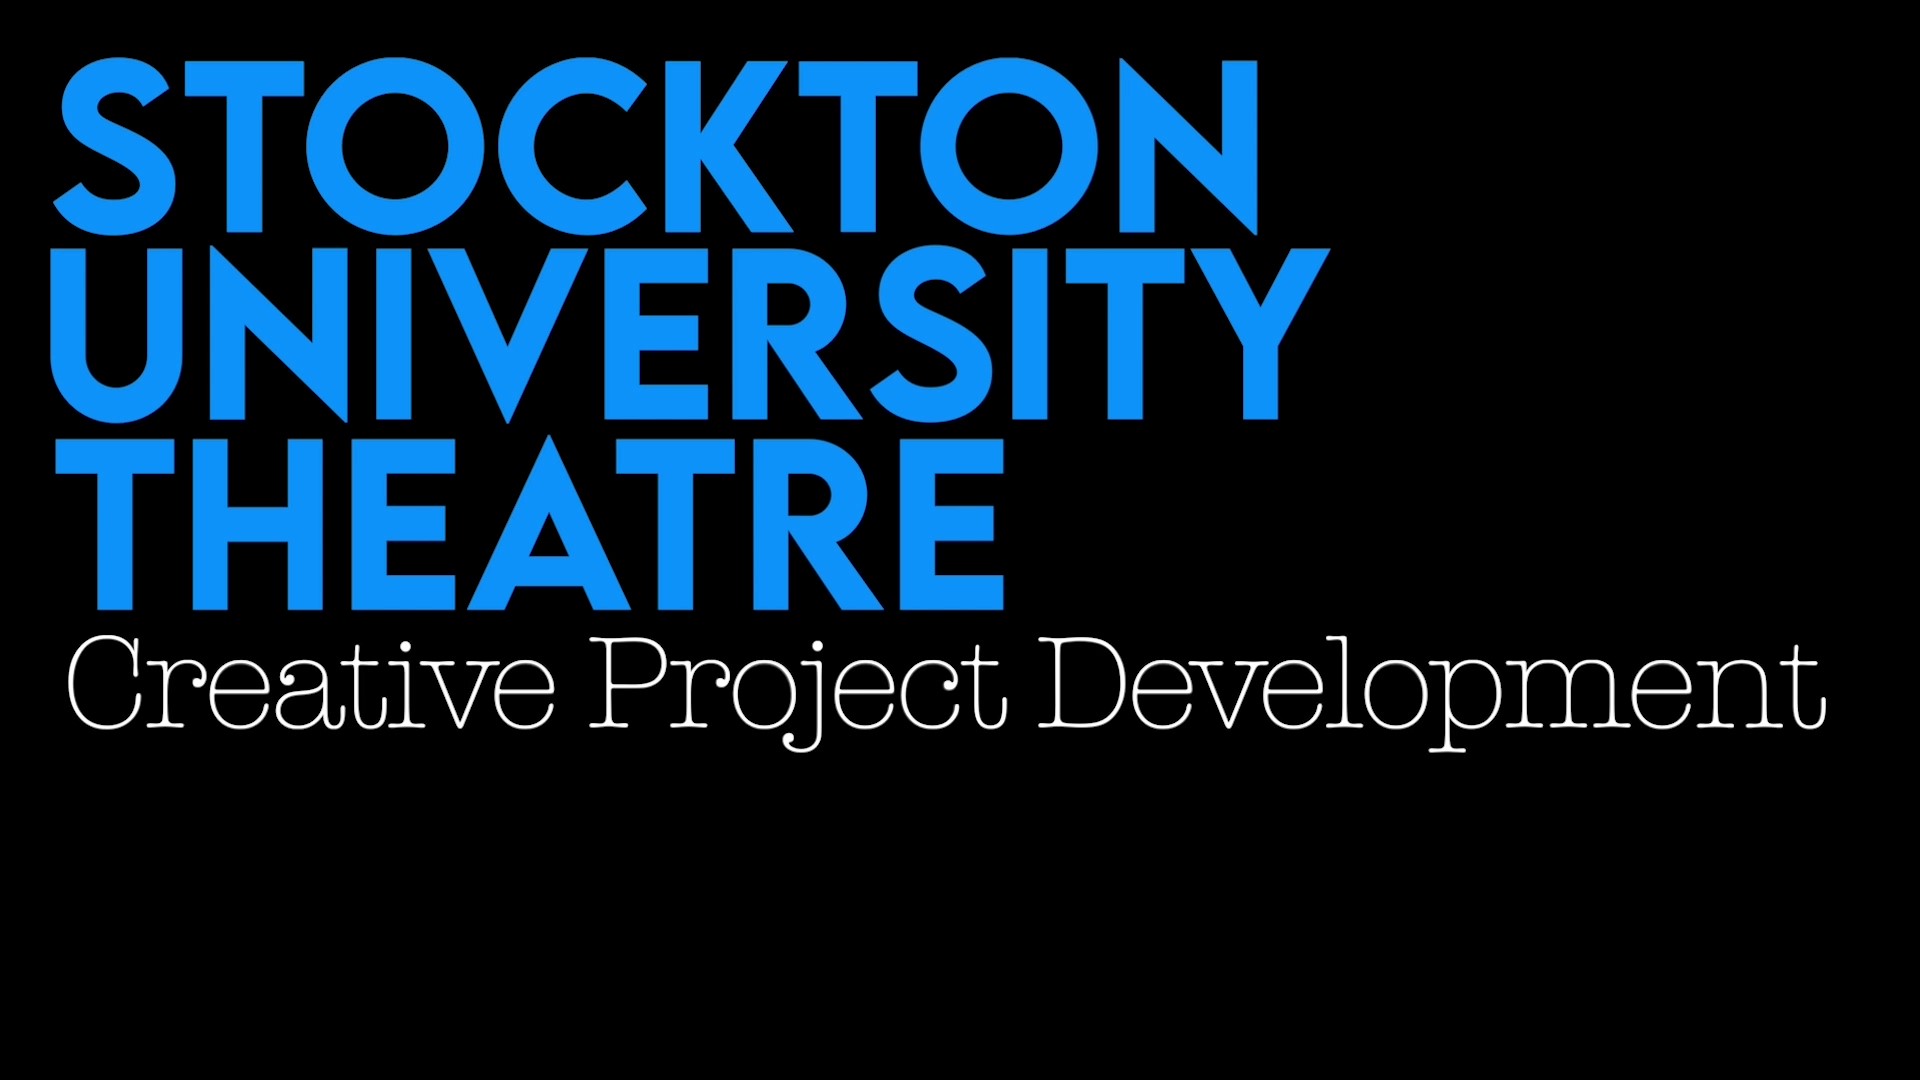 Stockton University Theatre Creative Project Development